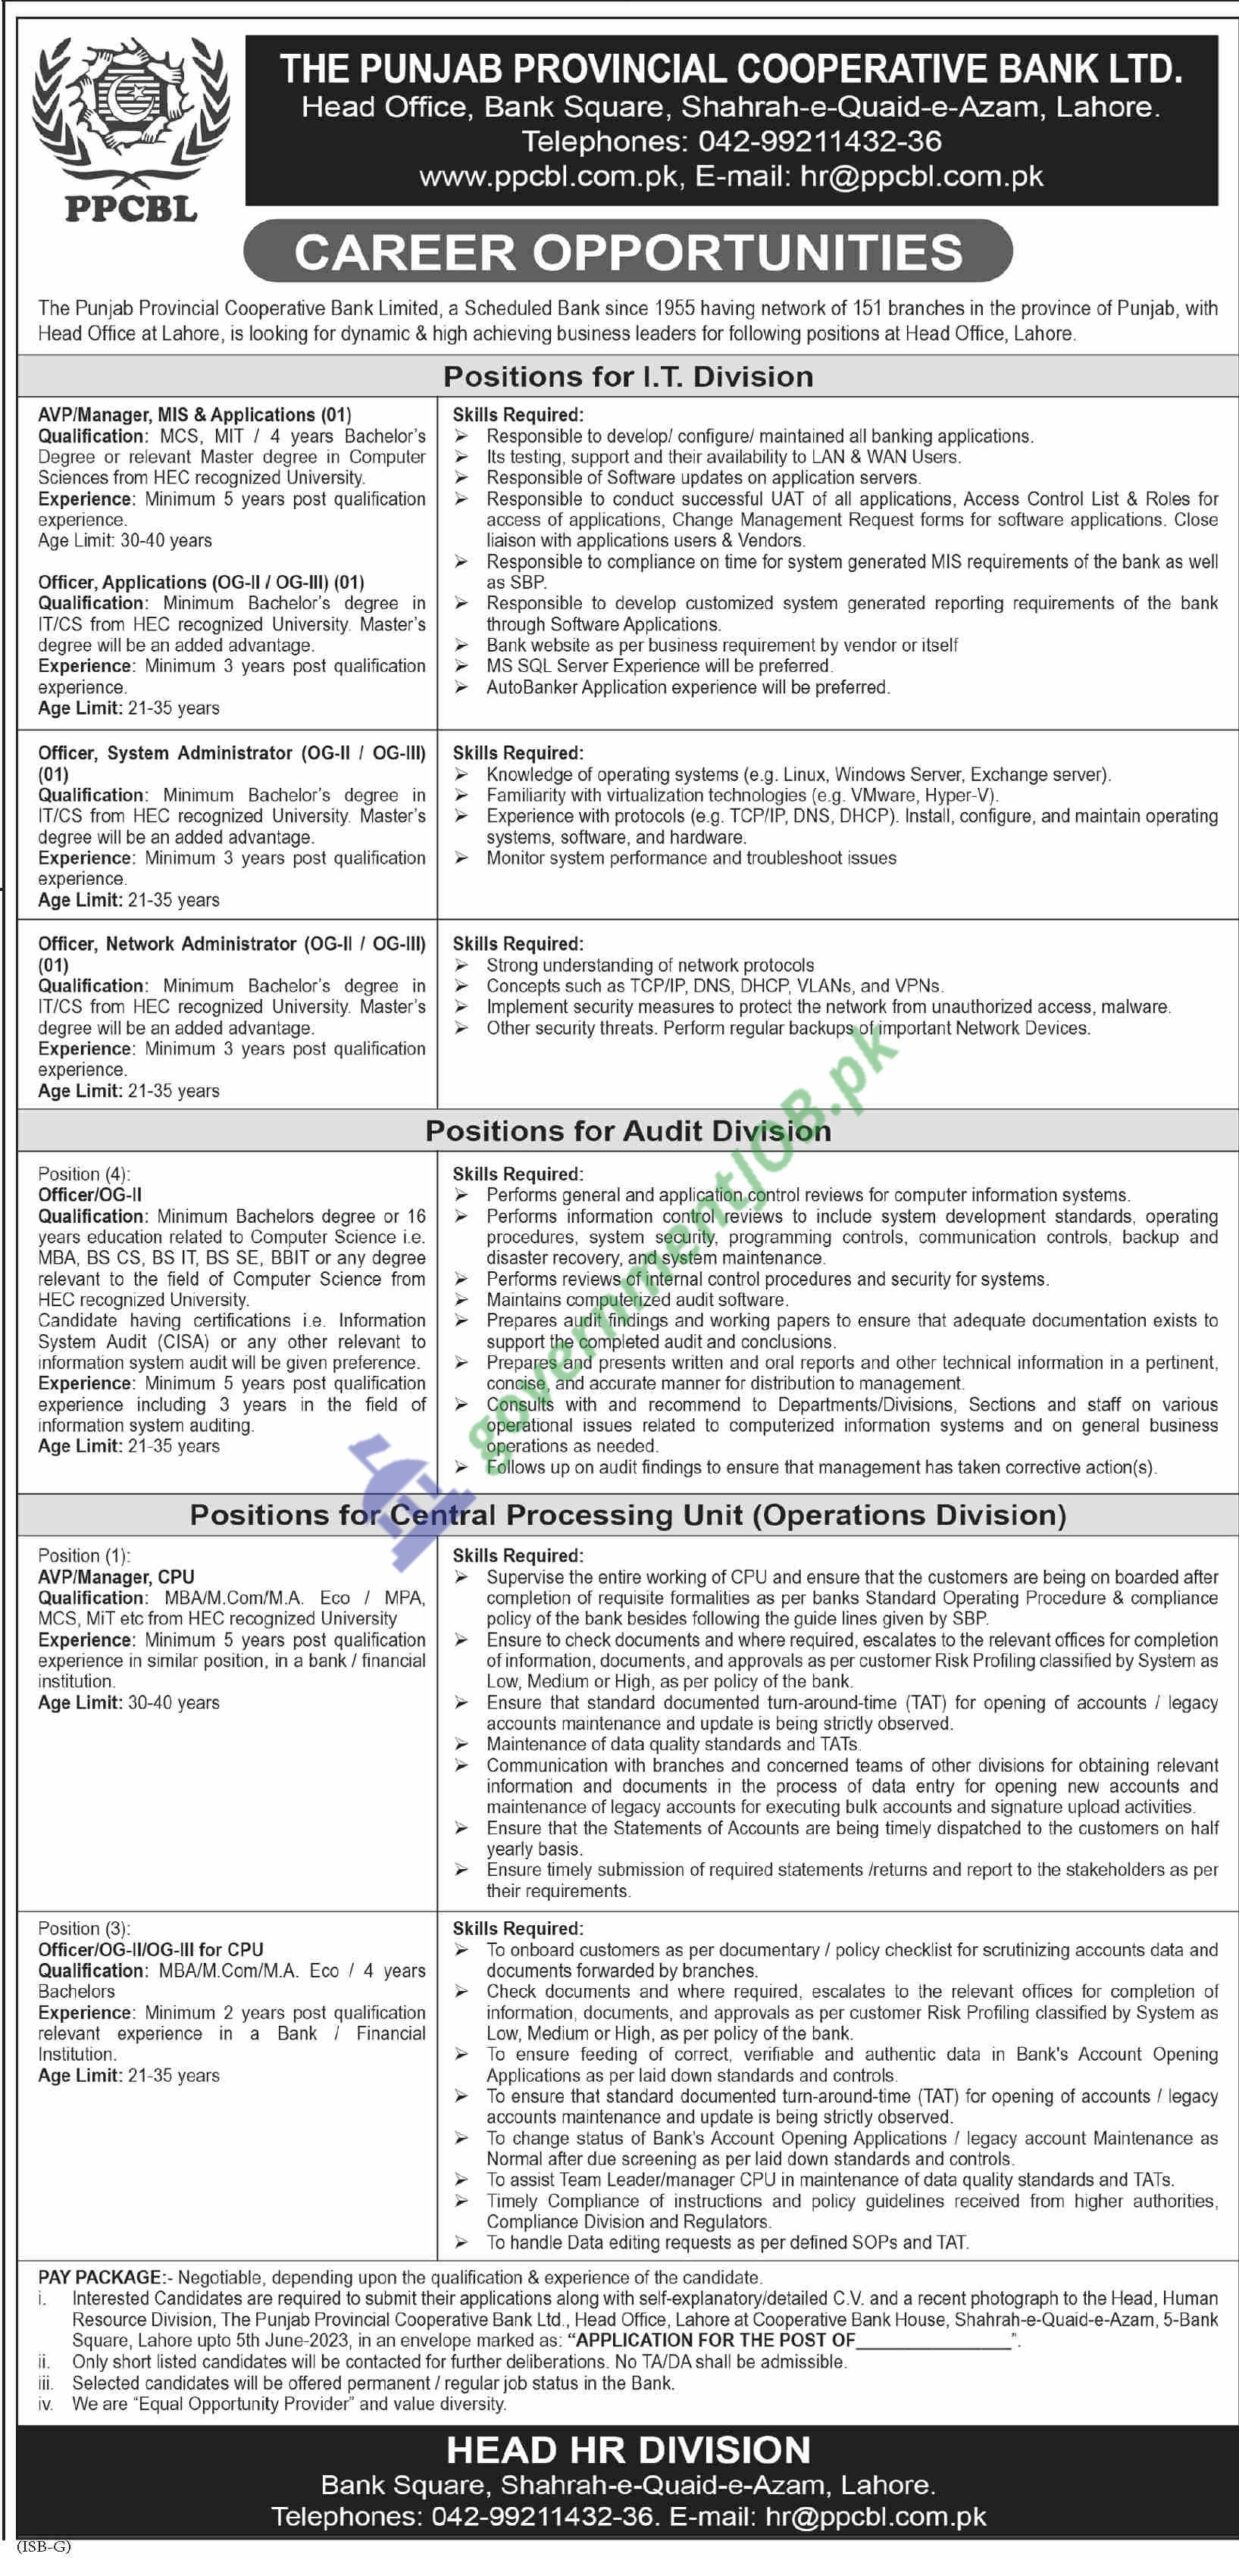 Punjab Provincial Cooperative Bank Jobs 2023